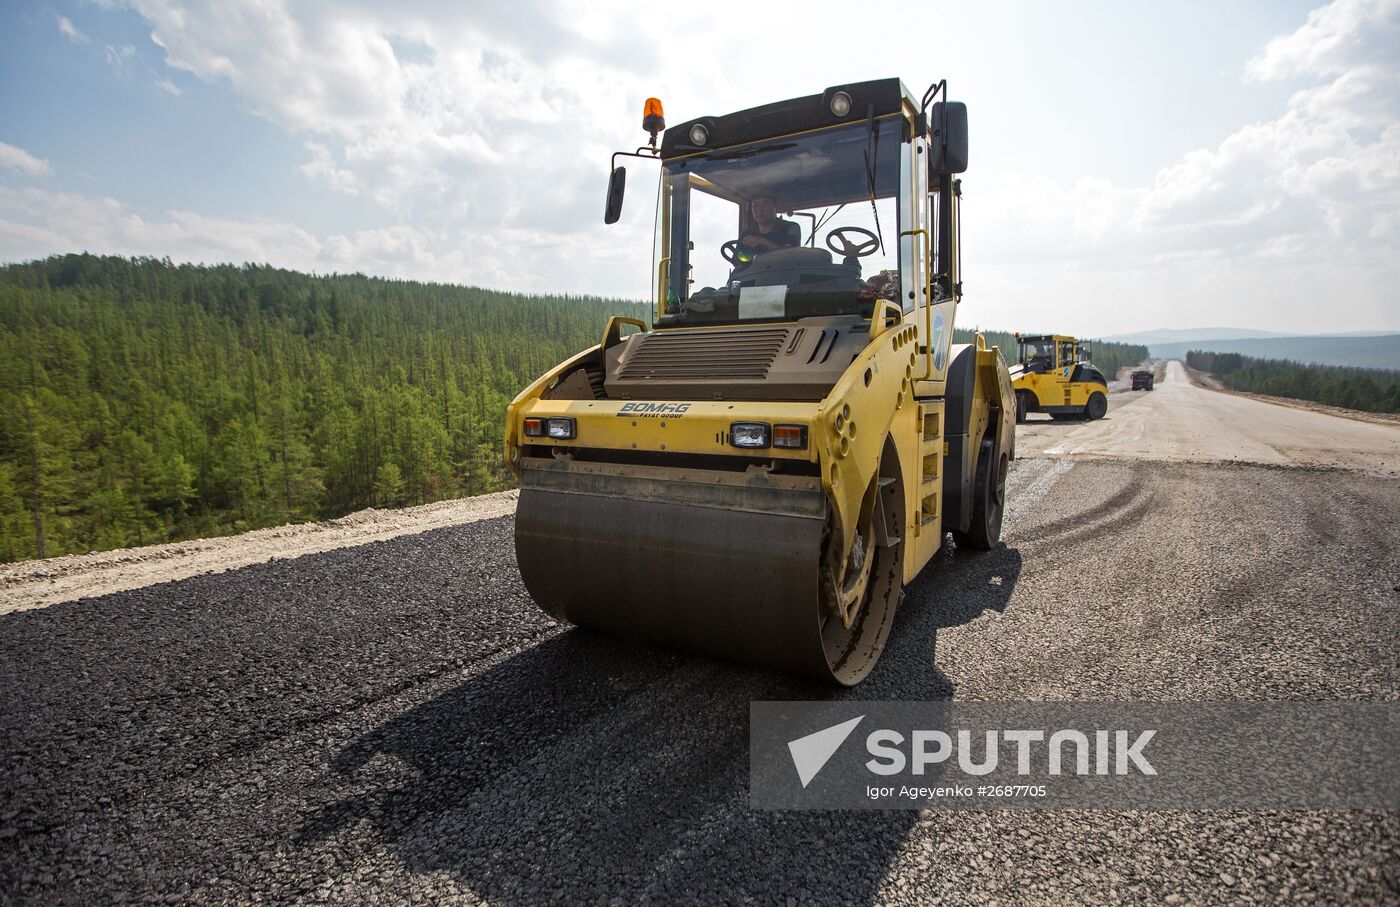 Lena federal highway under renovation in Amur River region